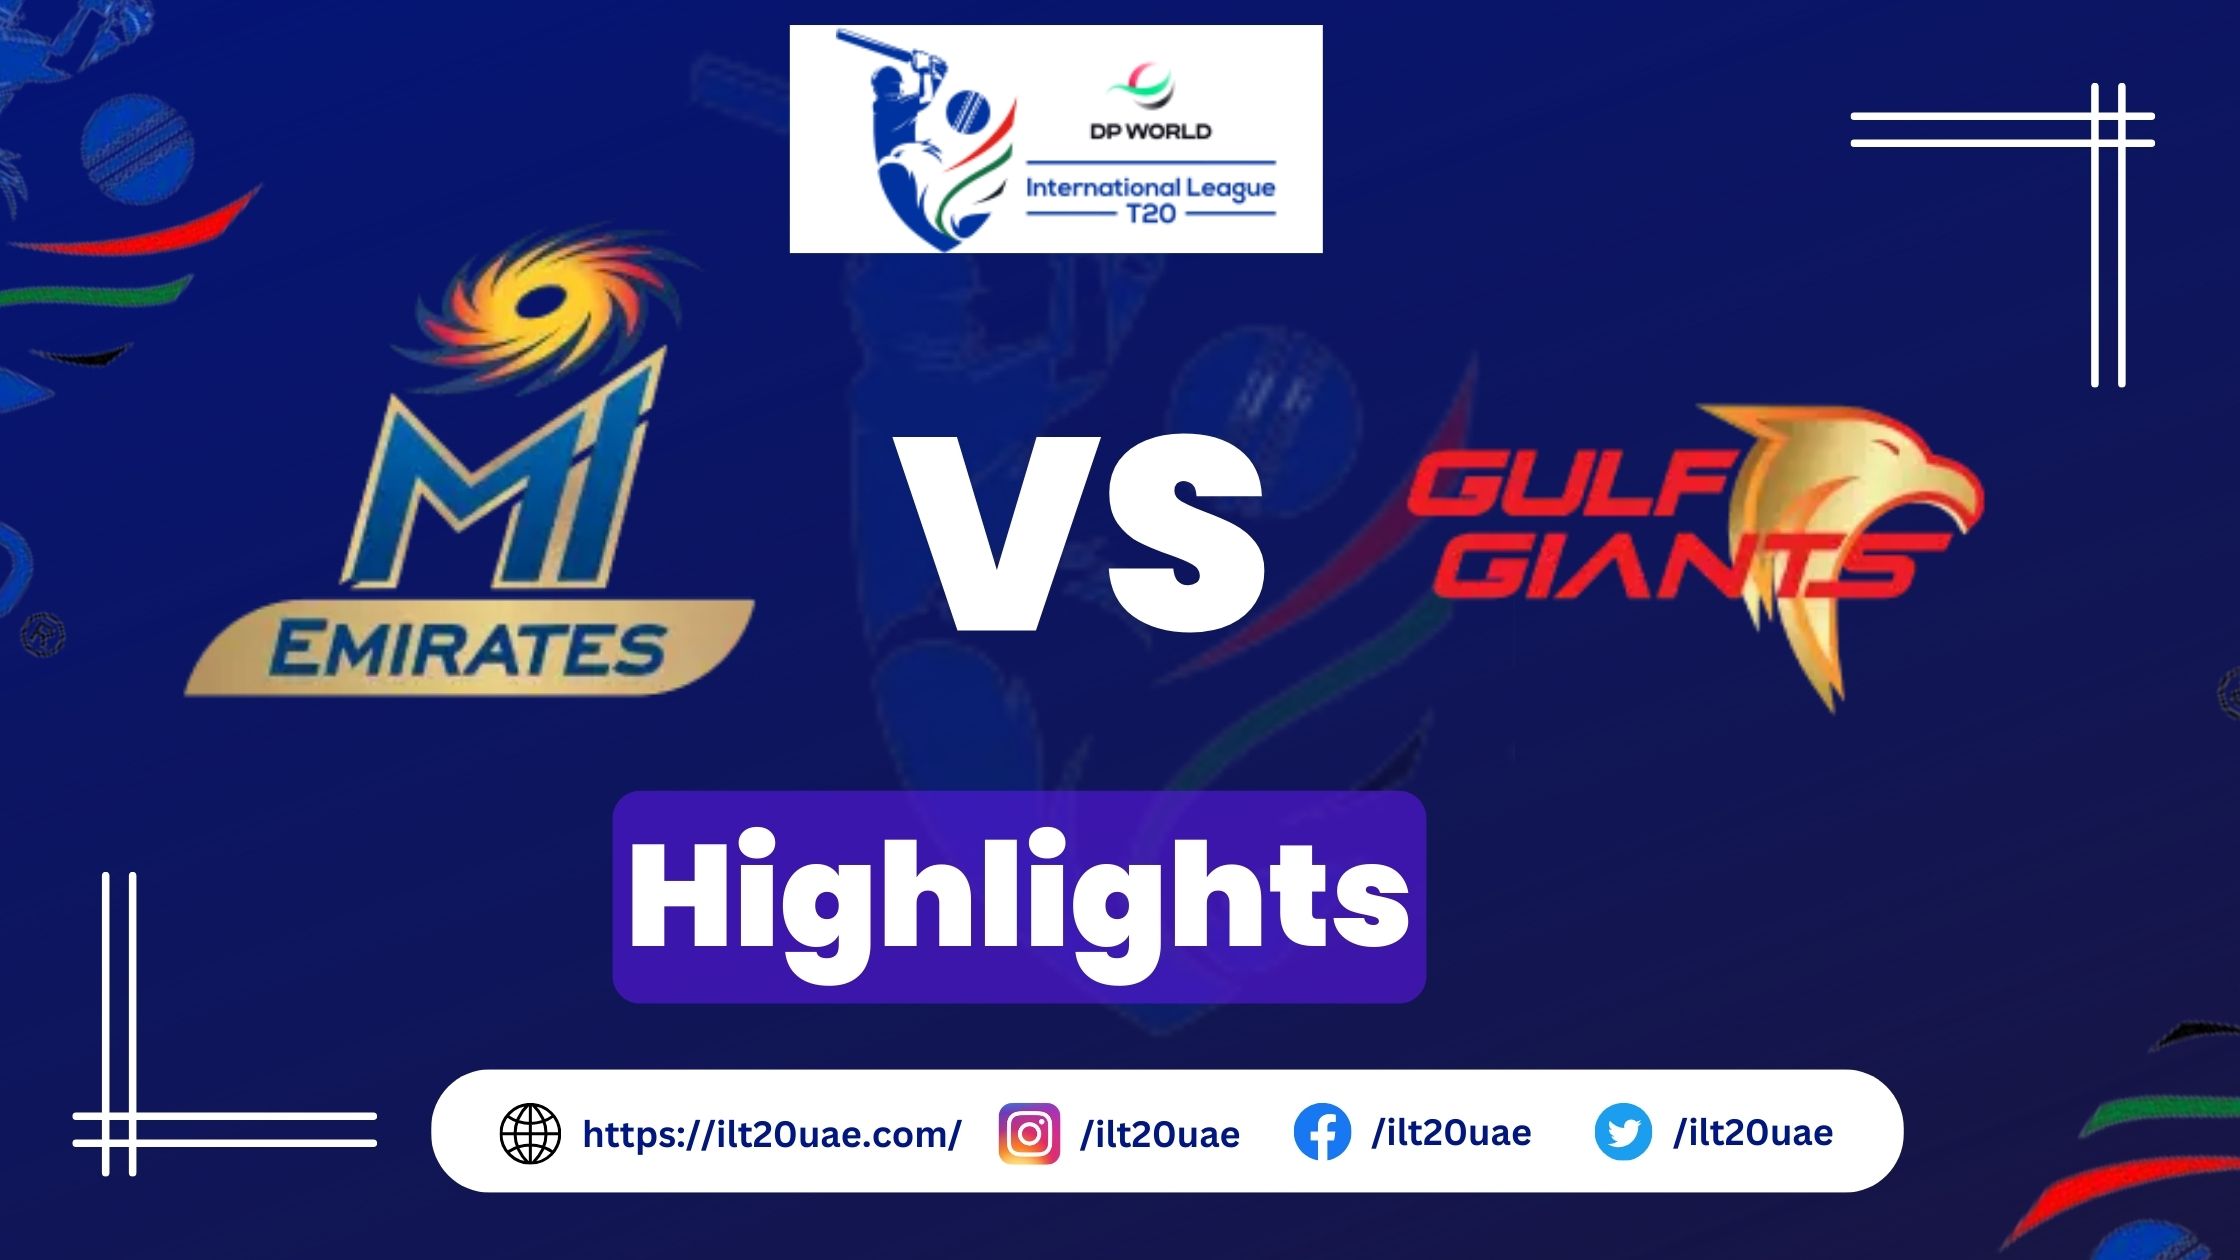 Gulf Giants vs MI Emirates Highlights